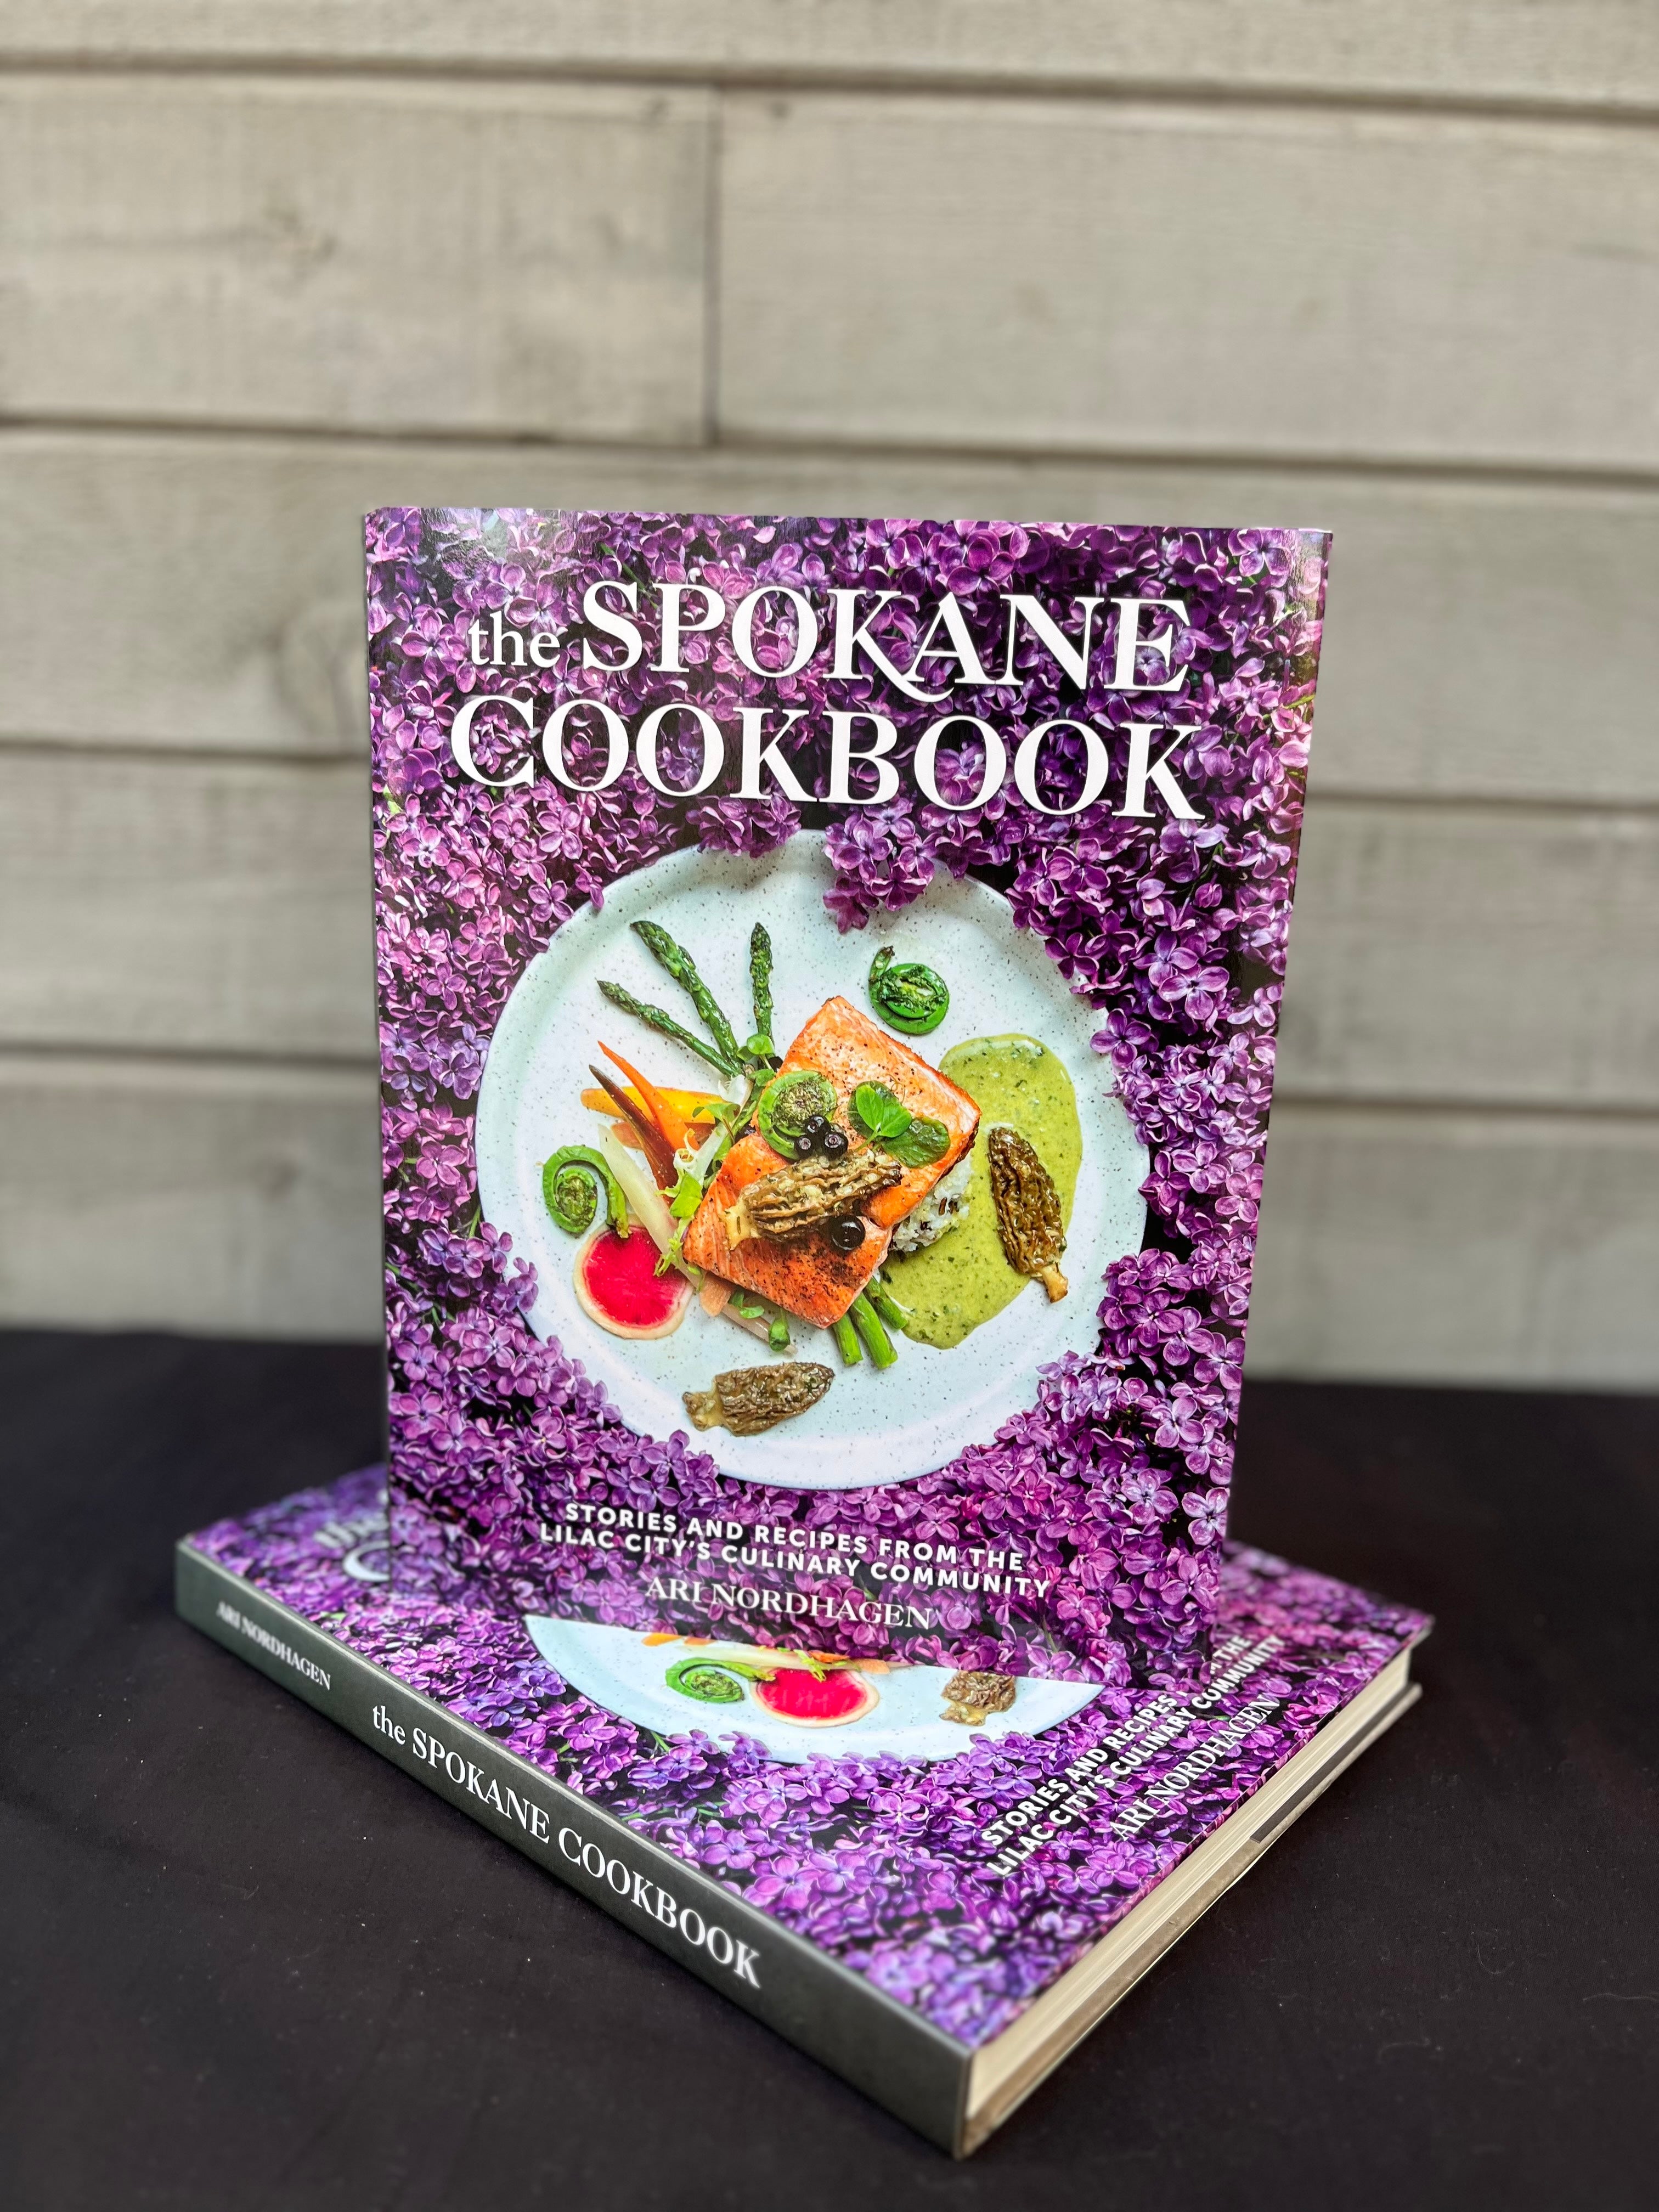 The Spokane Cookbook